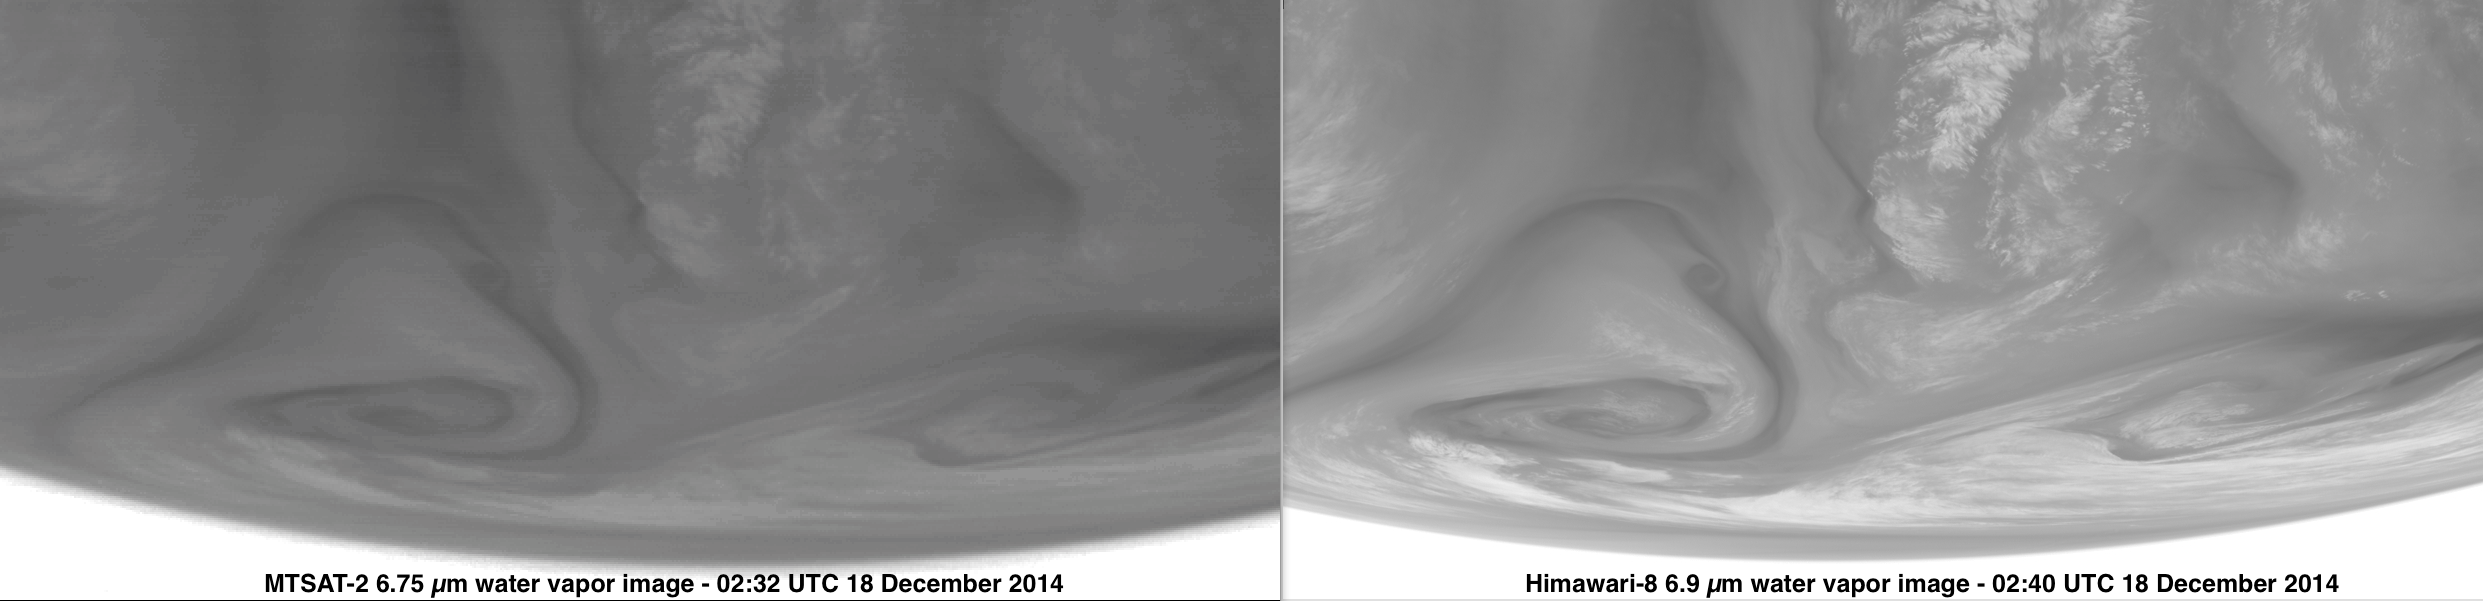 MTSAT-2 vs Himawari-8 water vapor channel images